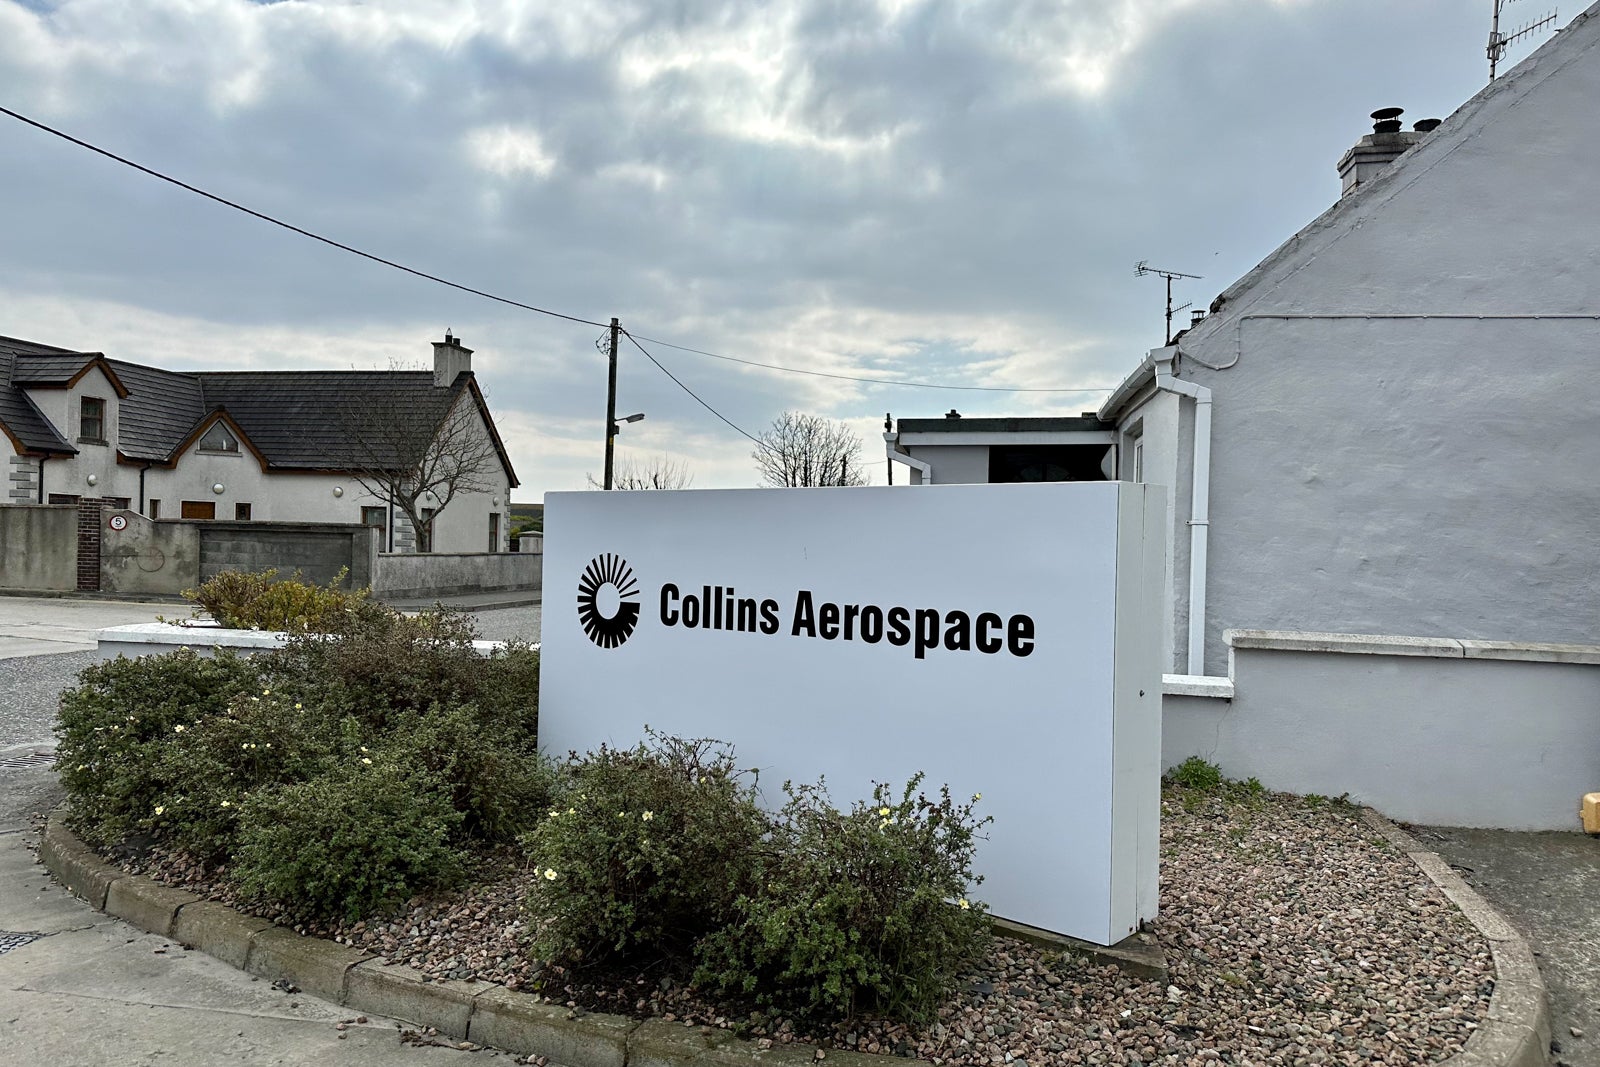 collins aerospace sign